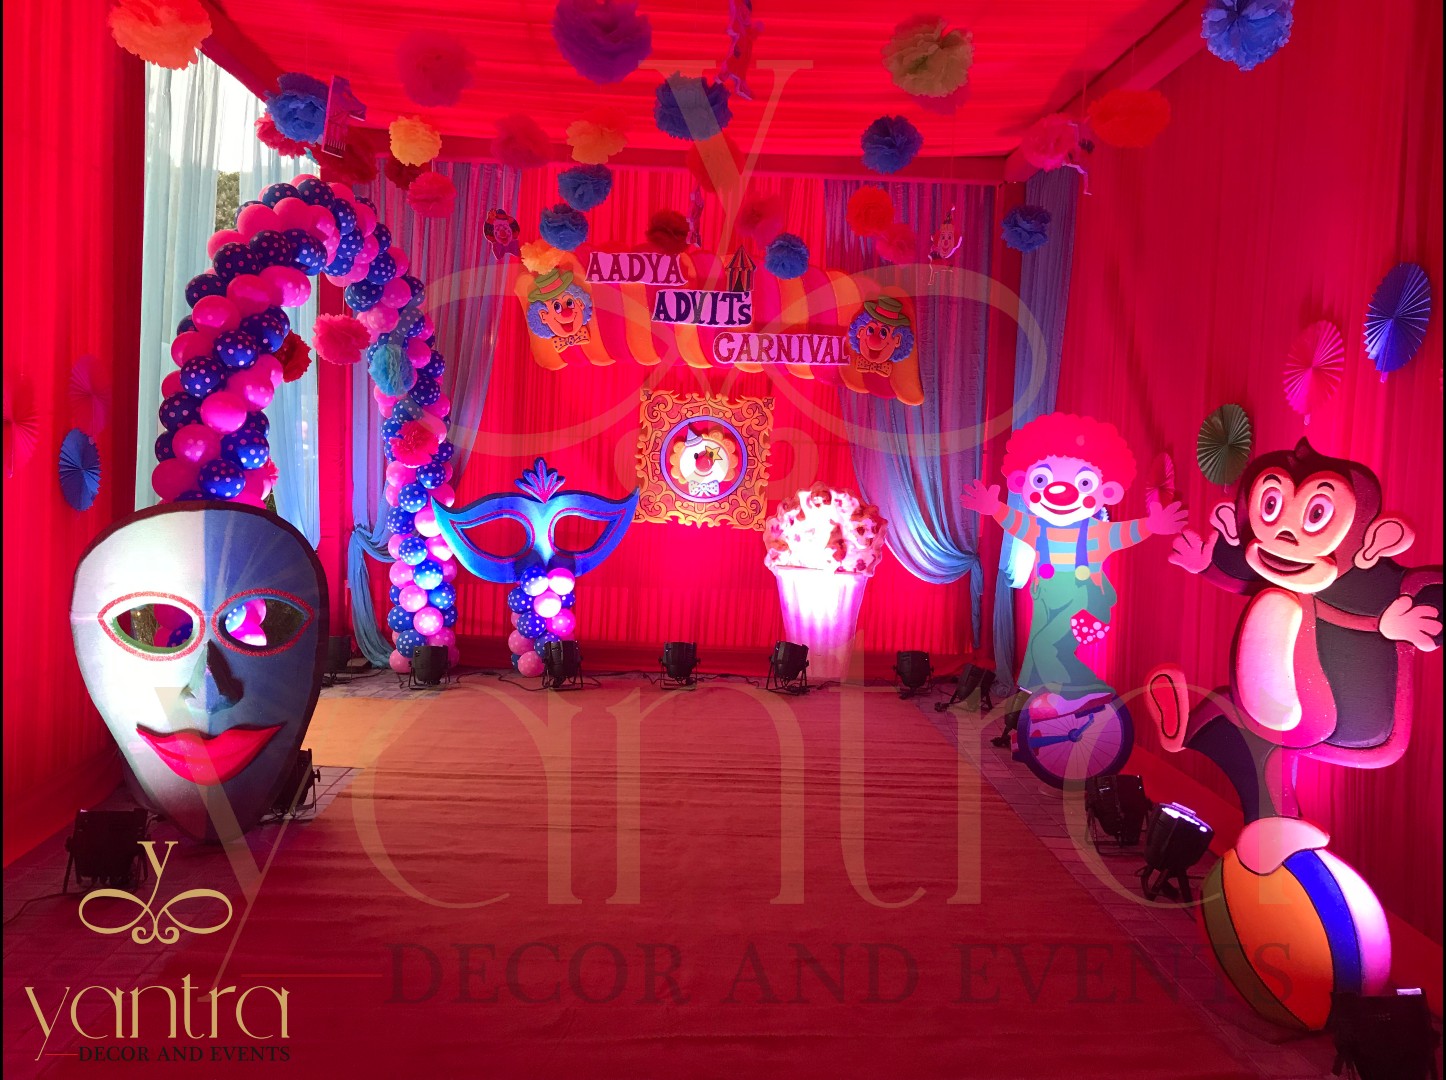 yantra-decor-events-birthday-party-entrance-decor-image